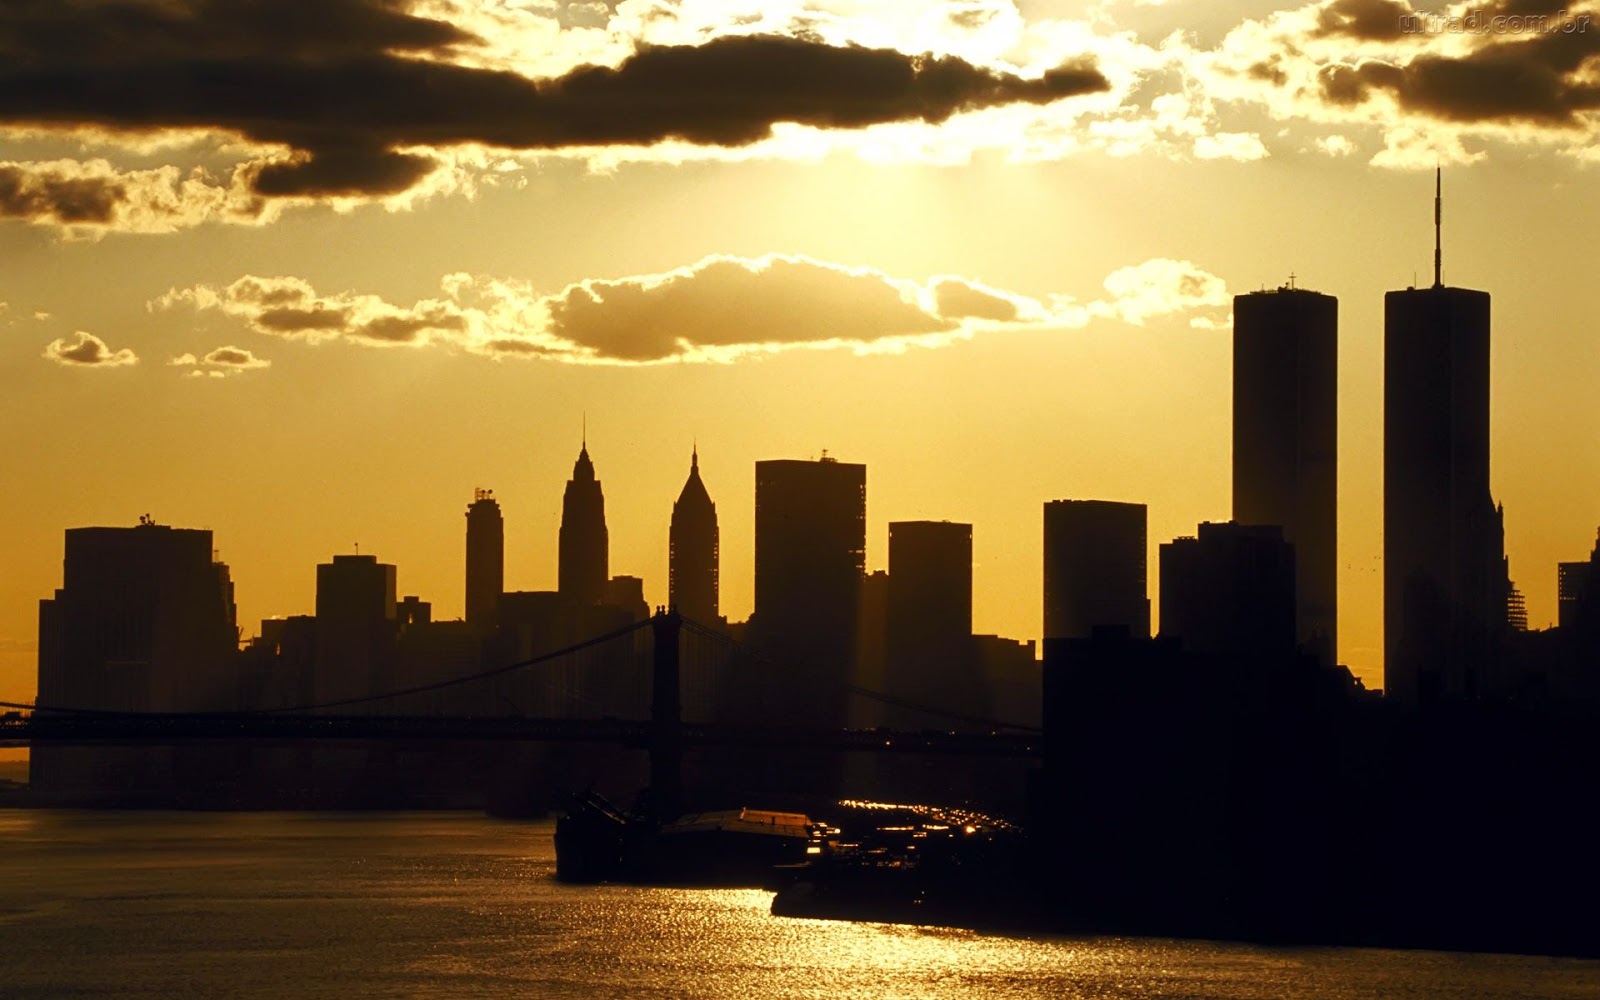 Manhattan at sunset